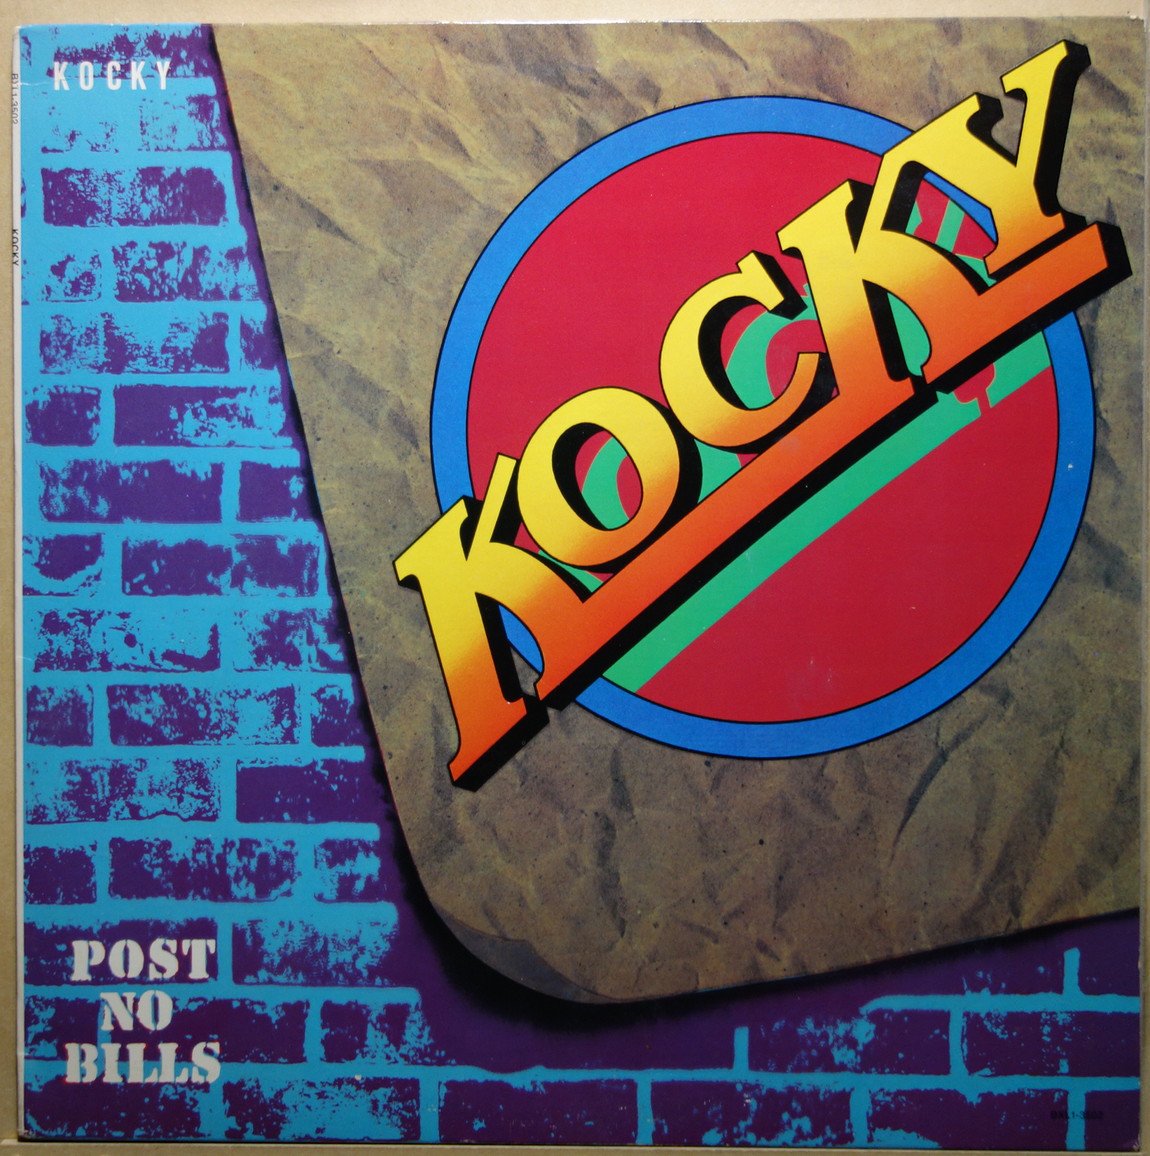 Kocky Post No Bills Vinylian Vintage Vinyl Record Shop